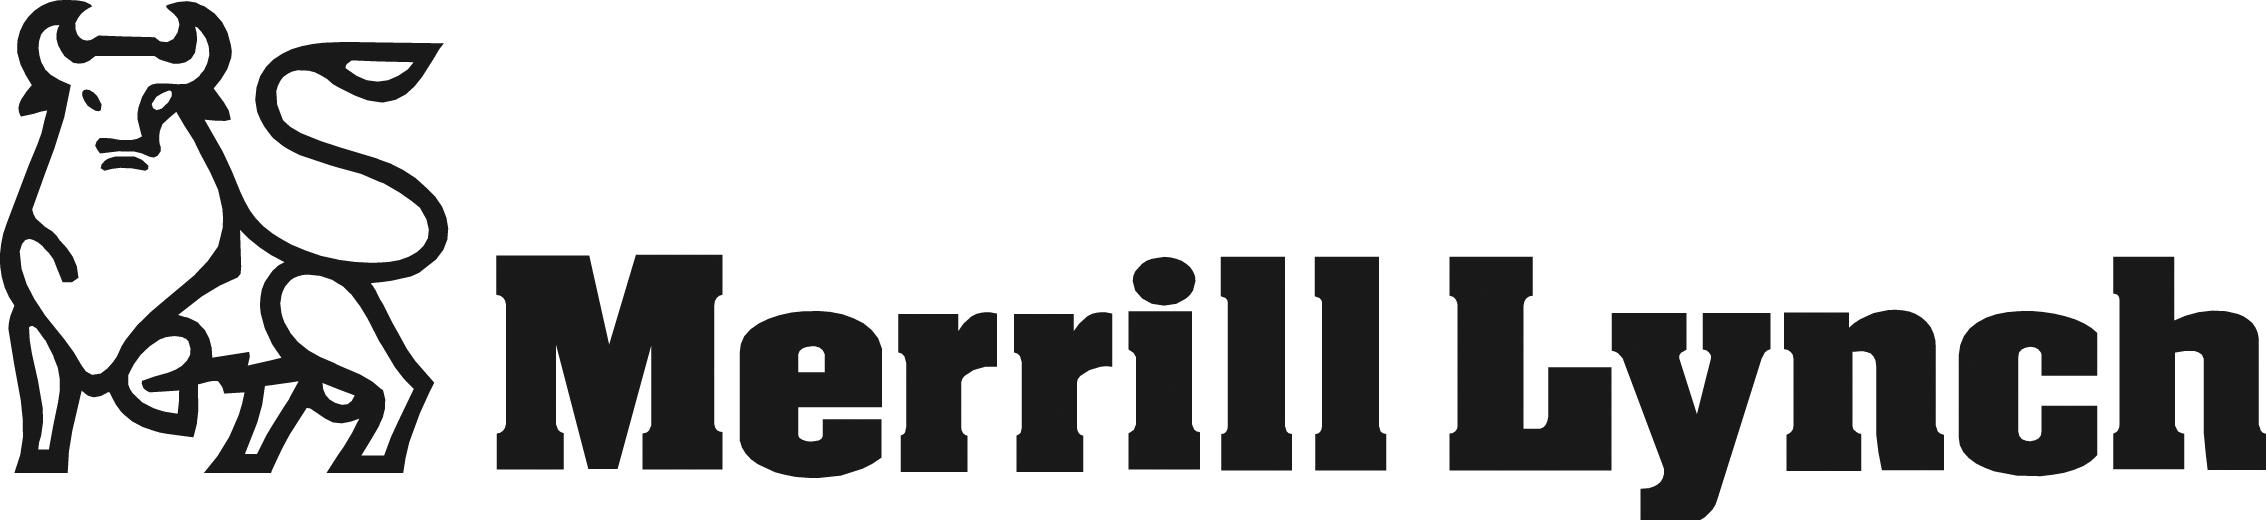 Лого инвестиционного банка Merrill Lynch до его покупки банком Bank Of America в 2008 году